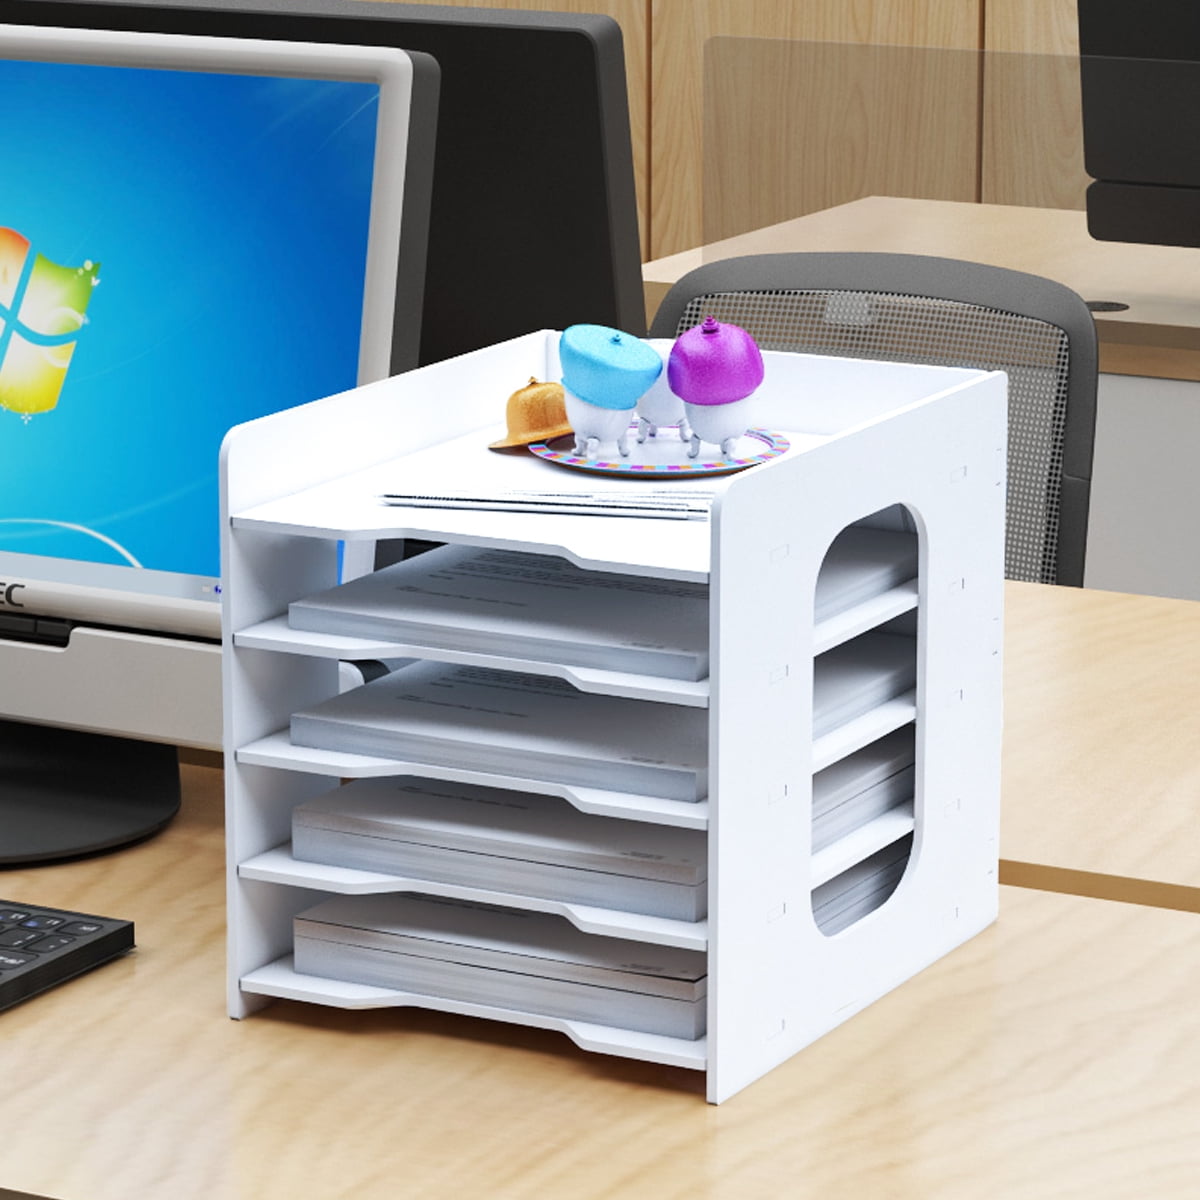 Natwind Office Paper Organizer for Desk Desktop Letter Tray & A4